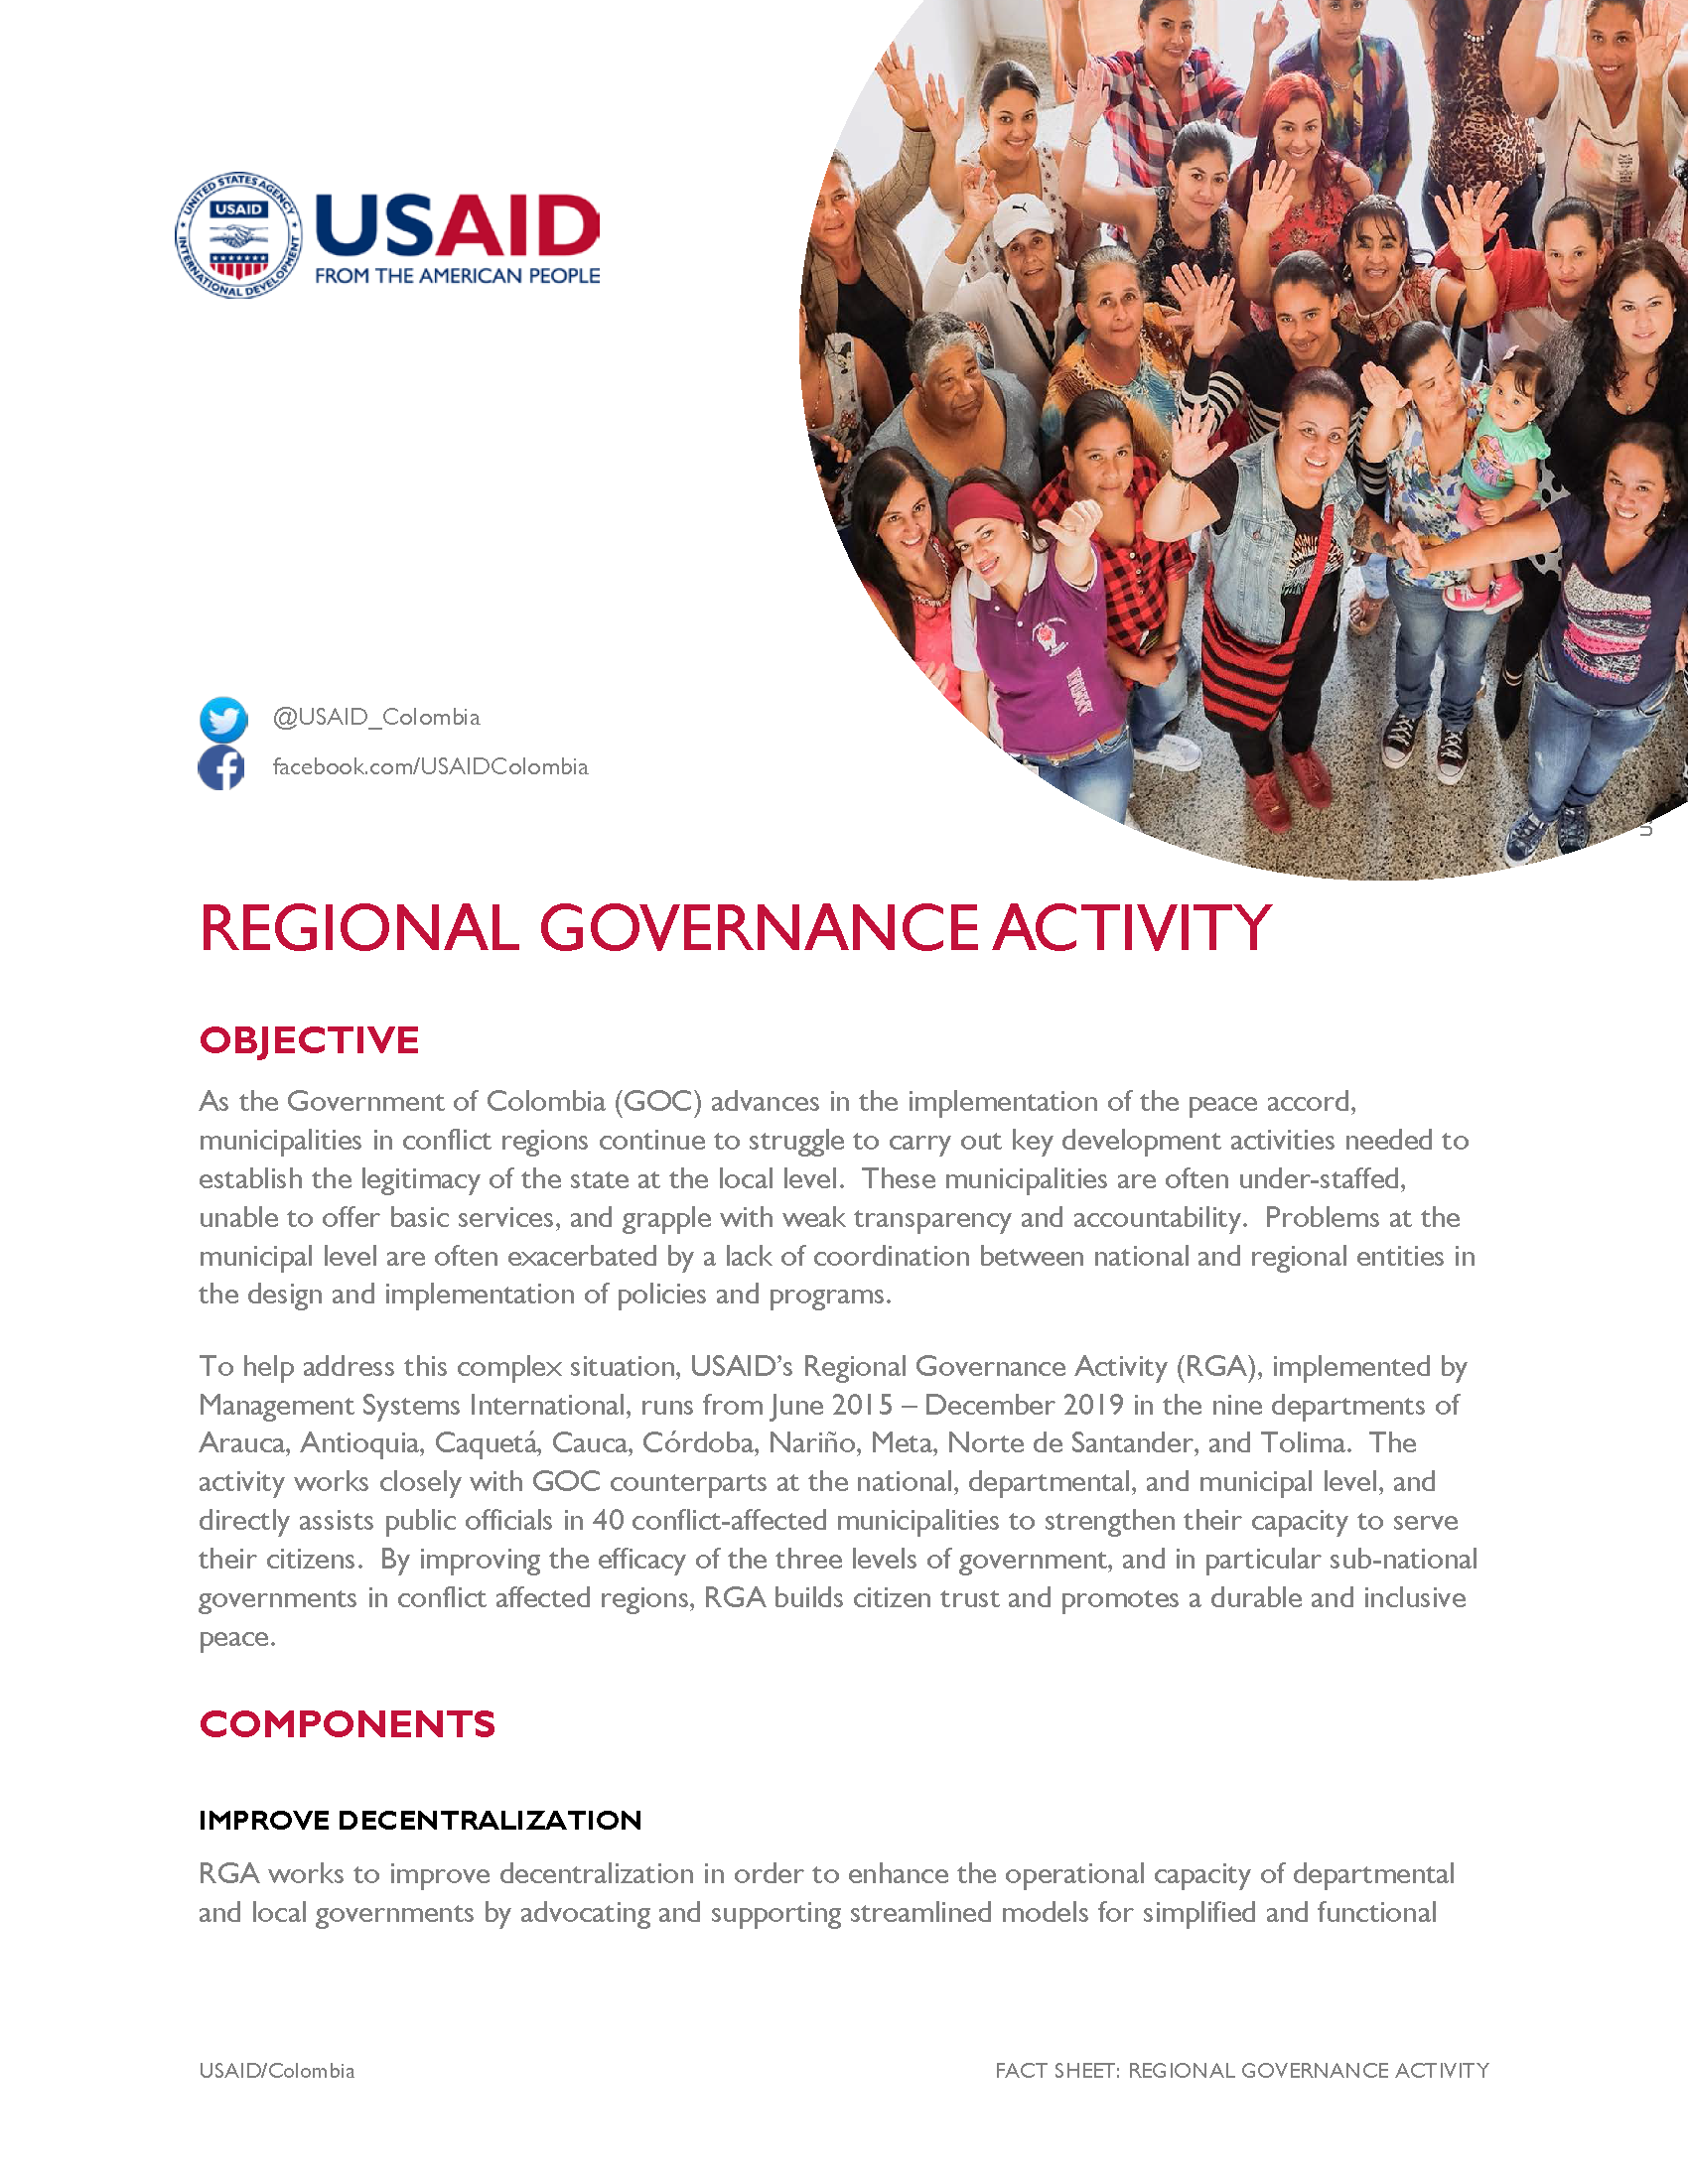 Regional Governance Activity (RGA) Fact Sheet